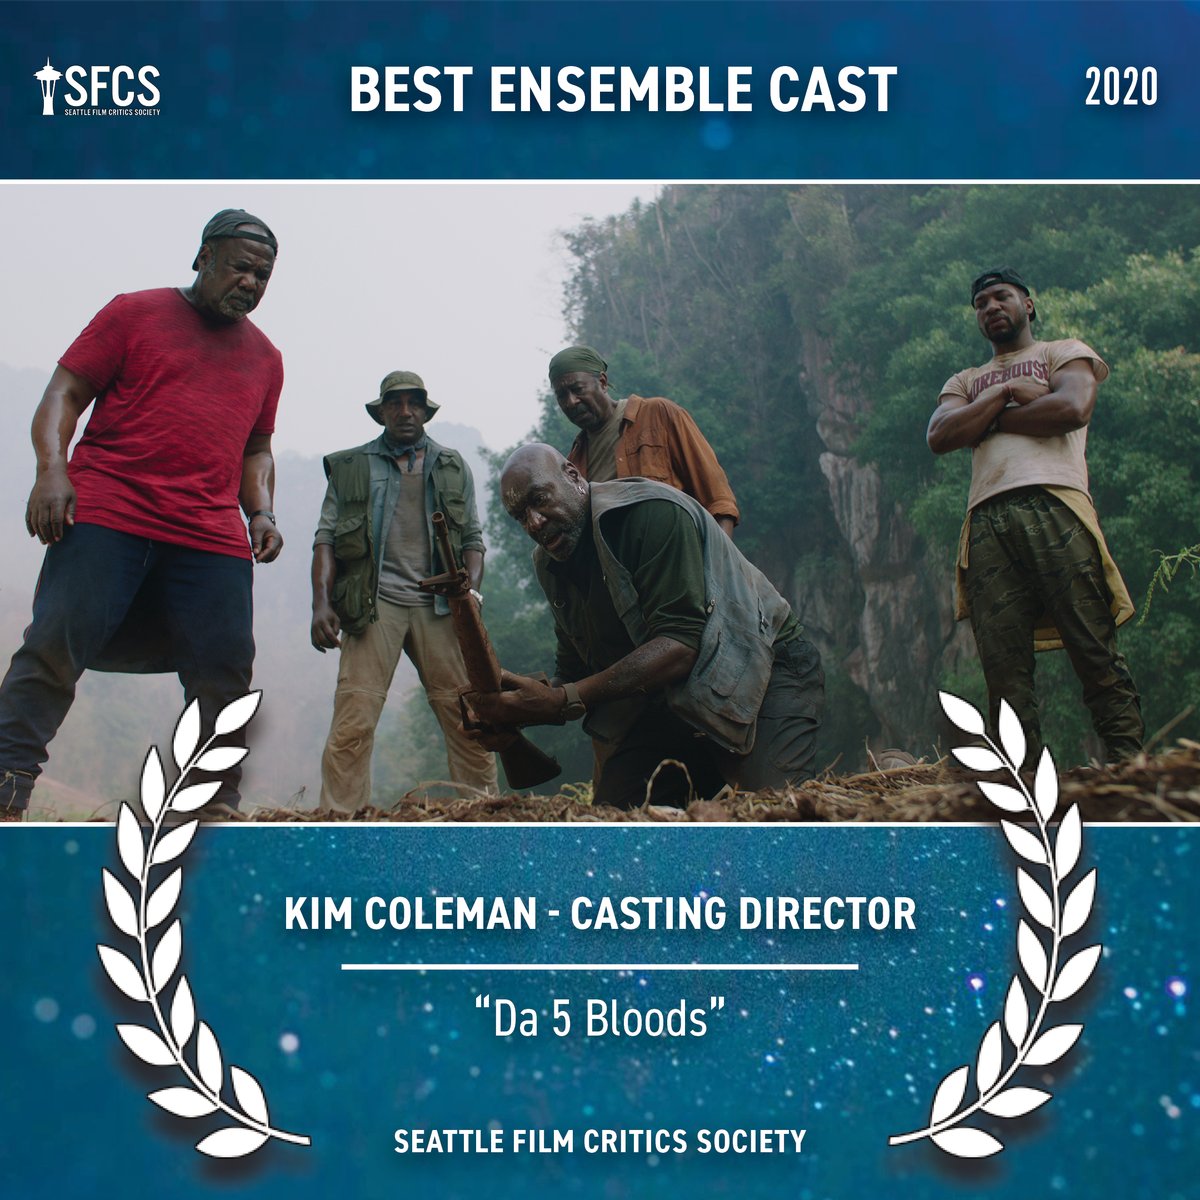 The 2020 @SeattleCritics winner for BEST ENSEMBLE CAST:
 
Da 5 Bloods | @NetflixFilm

Kim Coleman - Casting Director

#BestEnsembleCast #Da5Bloods #Netflix
#SFCSawards2020 #SFCS